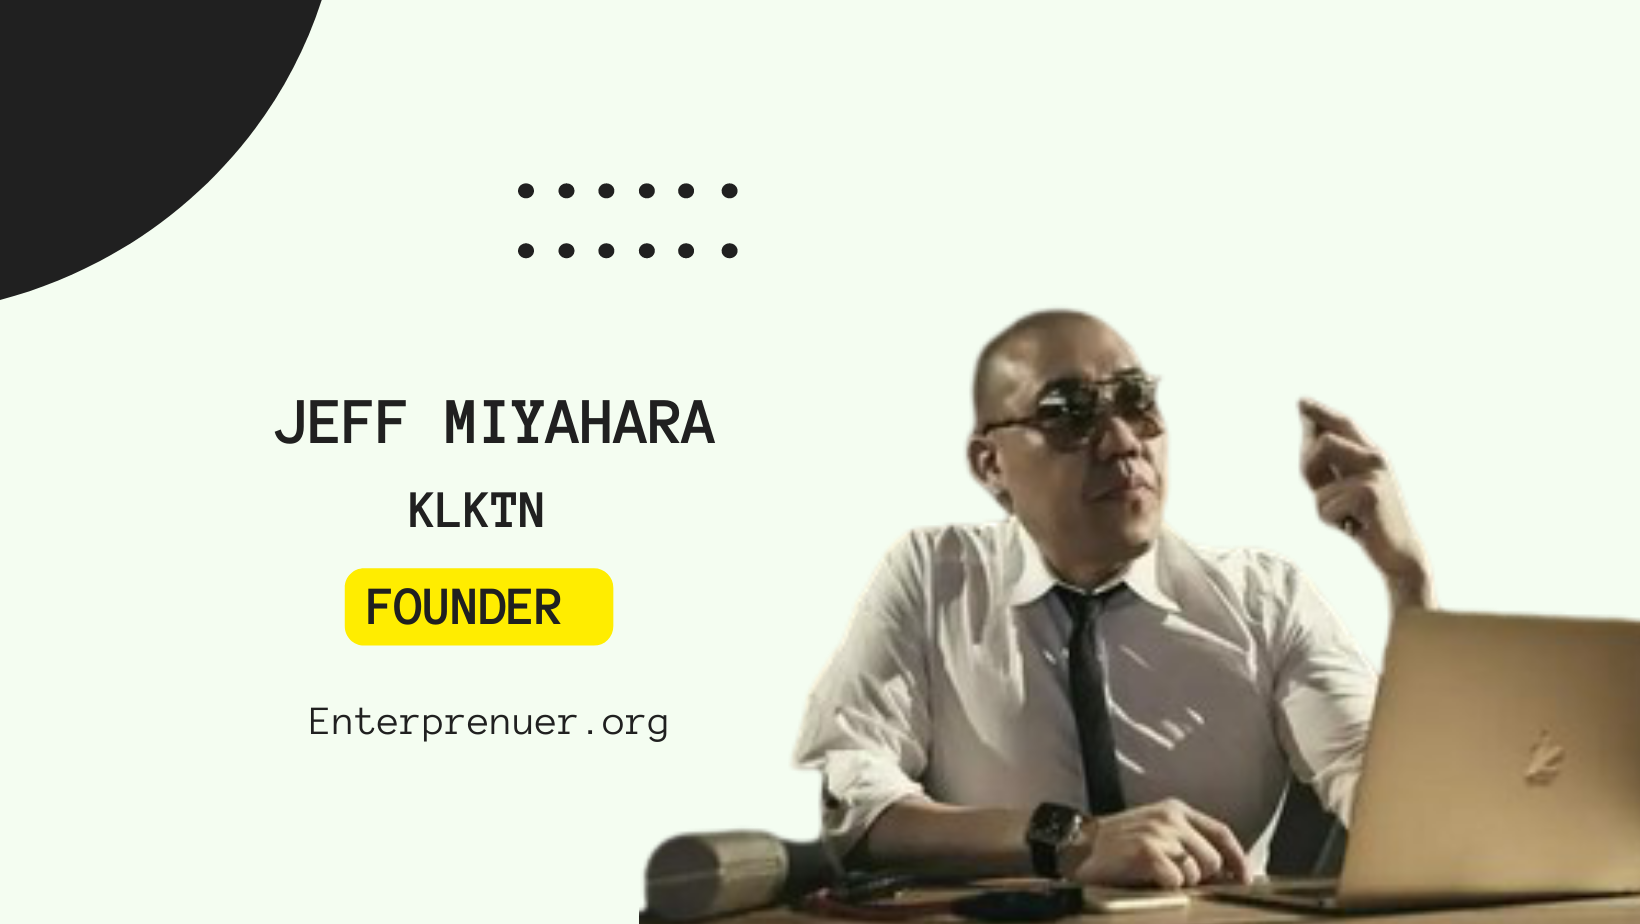 Jeff Miyahara Co-Founder of KLKTN